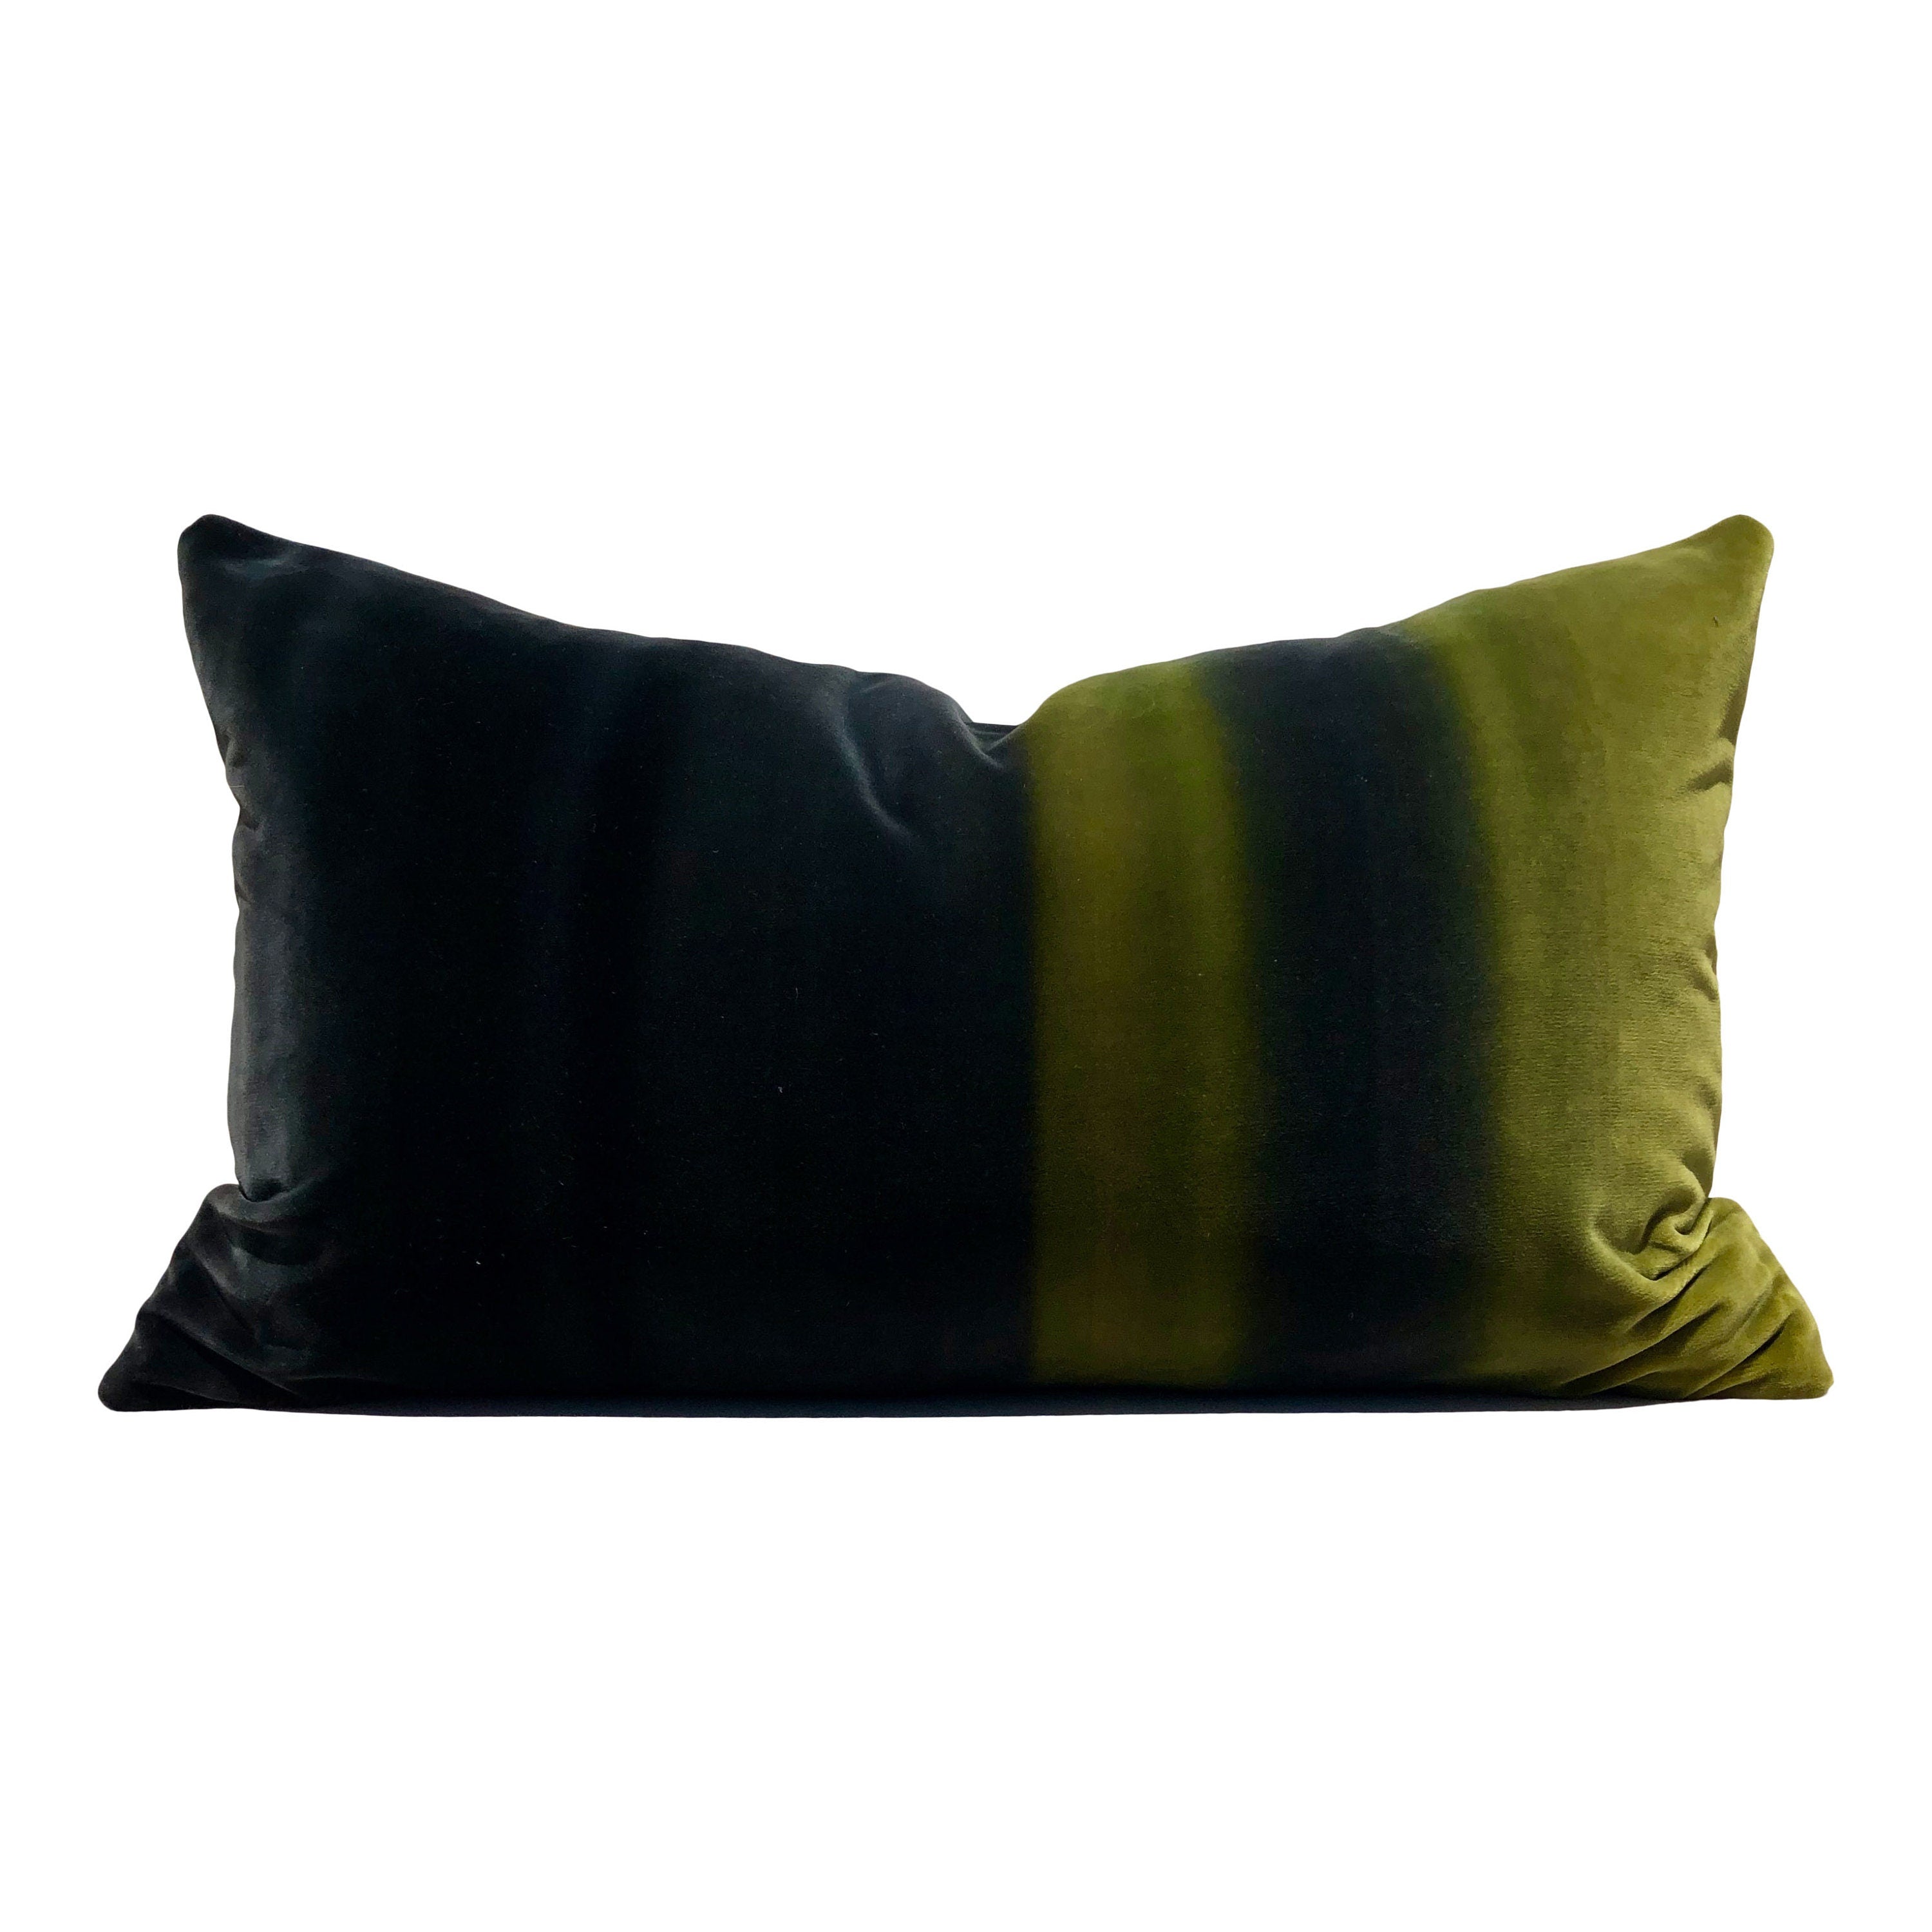 Ombre Velvet Pillow in  Mustard and Elephant.